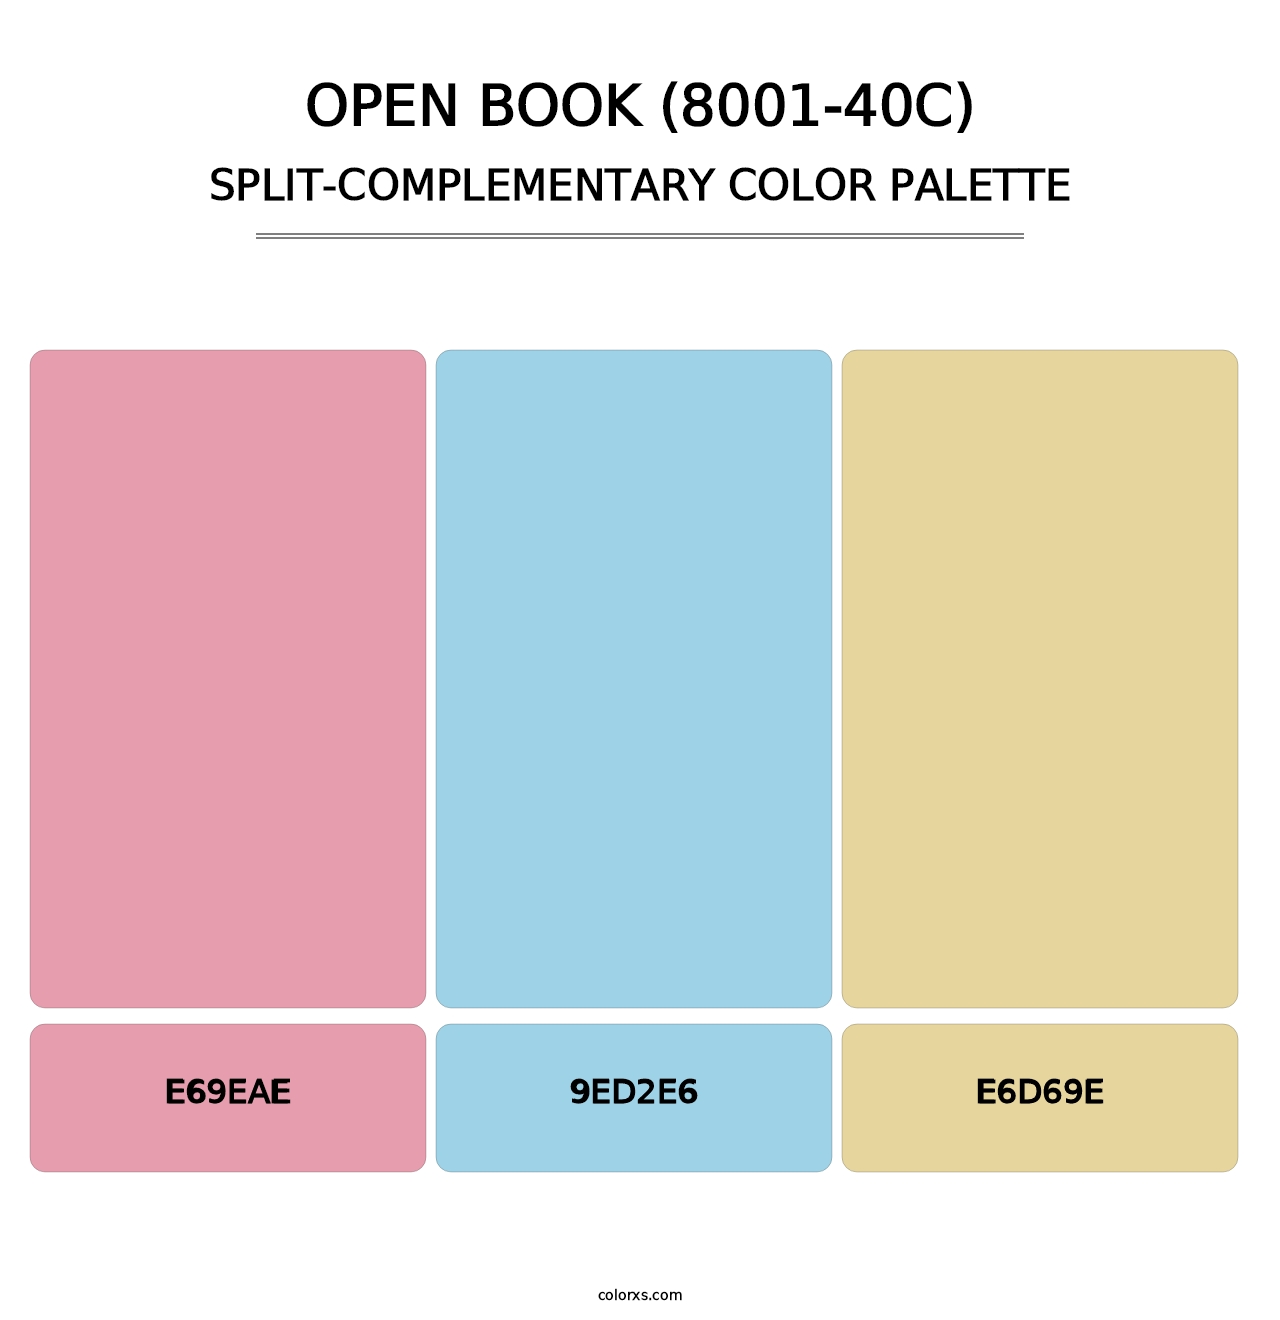 Open Book (8001-40C) - Split-Complementary Color Palette